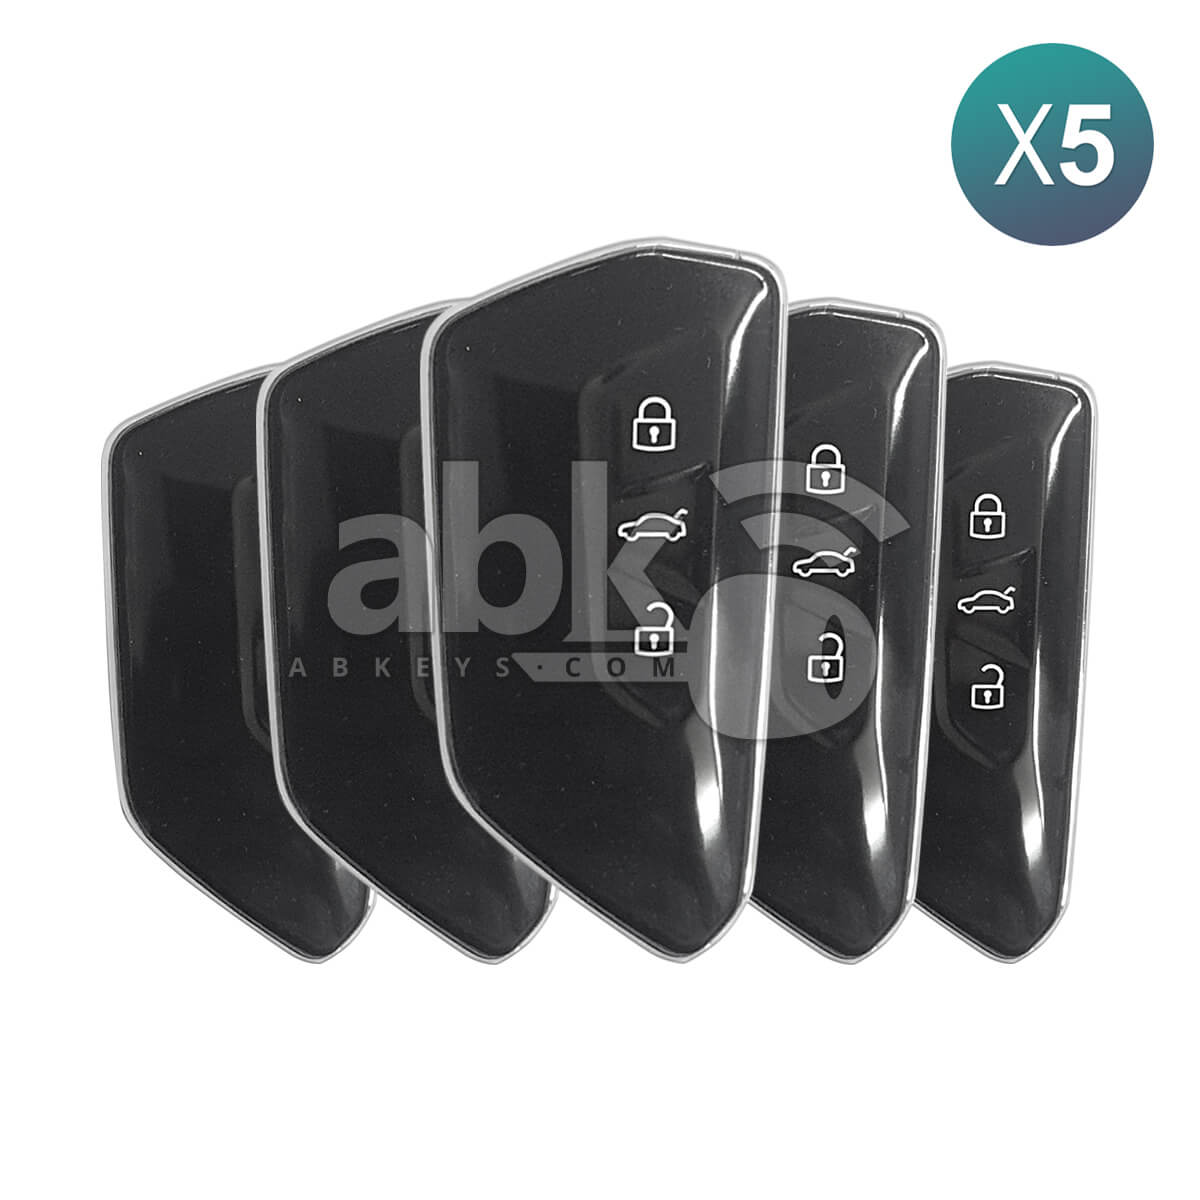 Genuine Volkswagen ID3 ID4 Golf 2020+ Smart Key 3Buttons 5HG959753B 433MHz FS19 5Pcs Bundle -